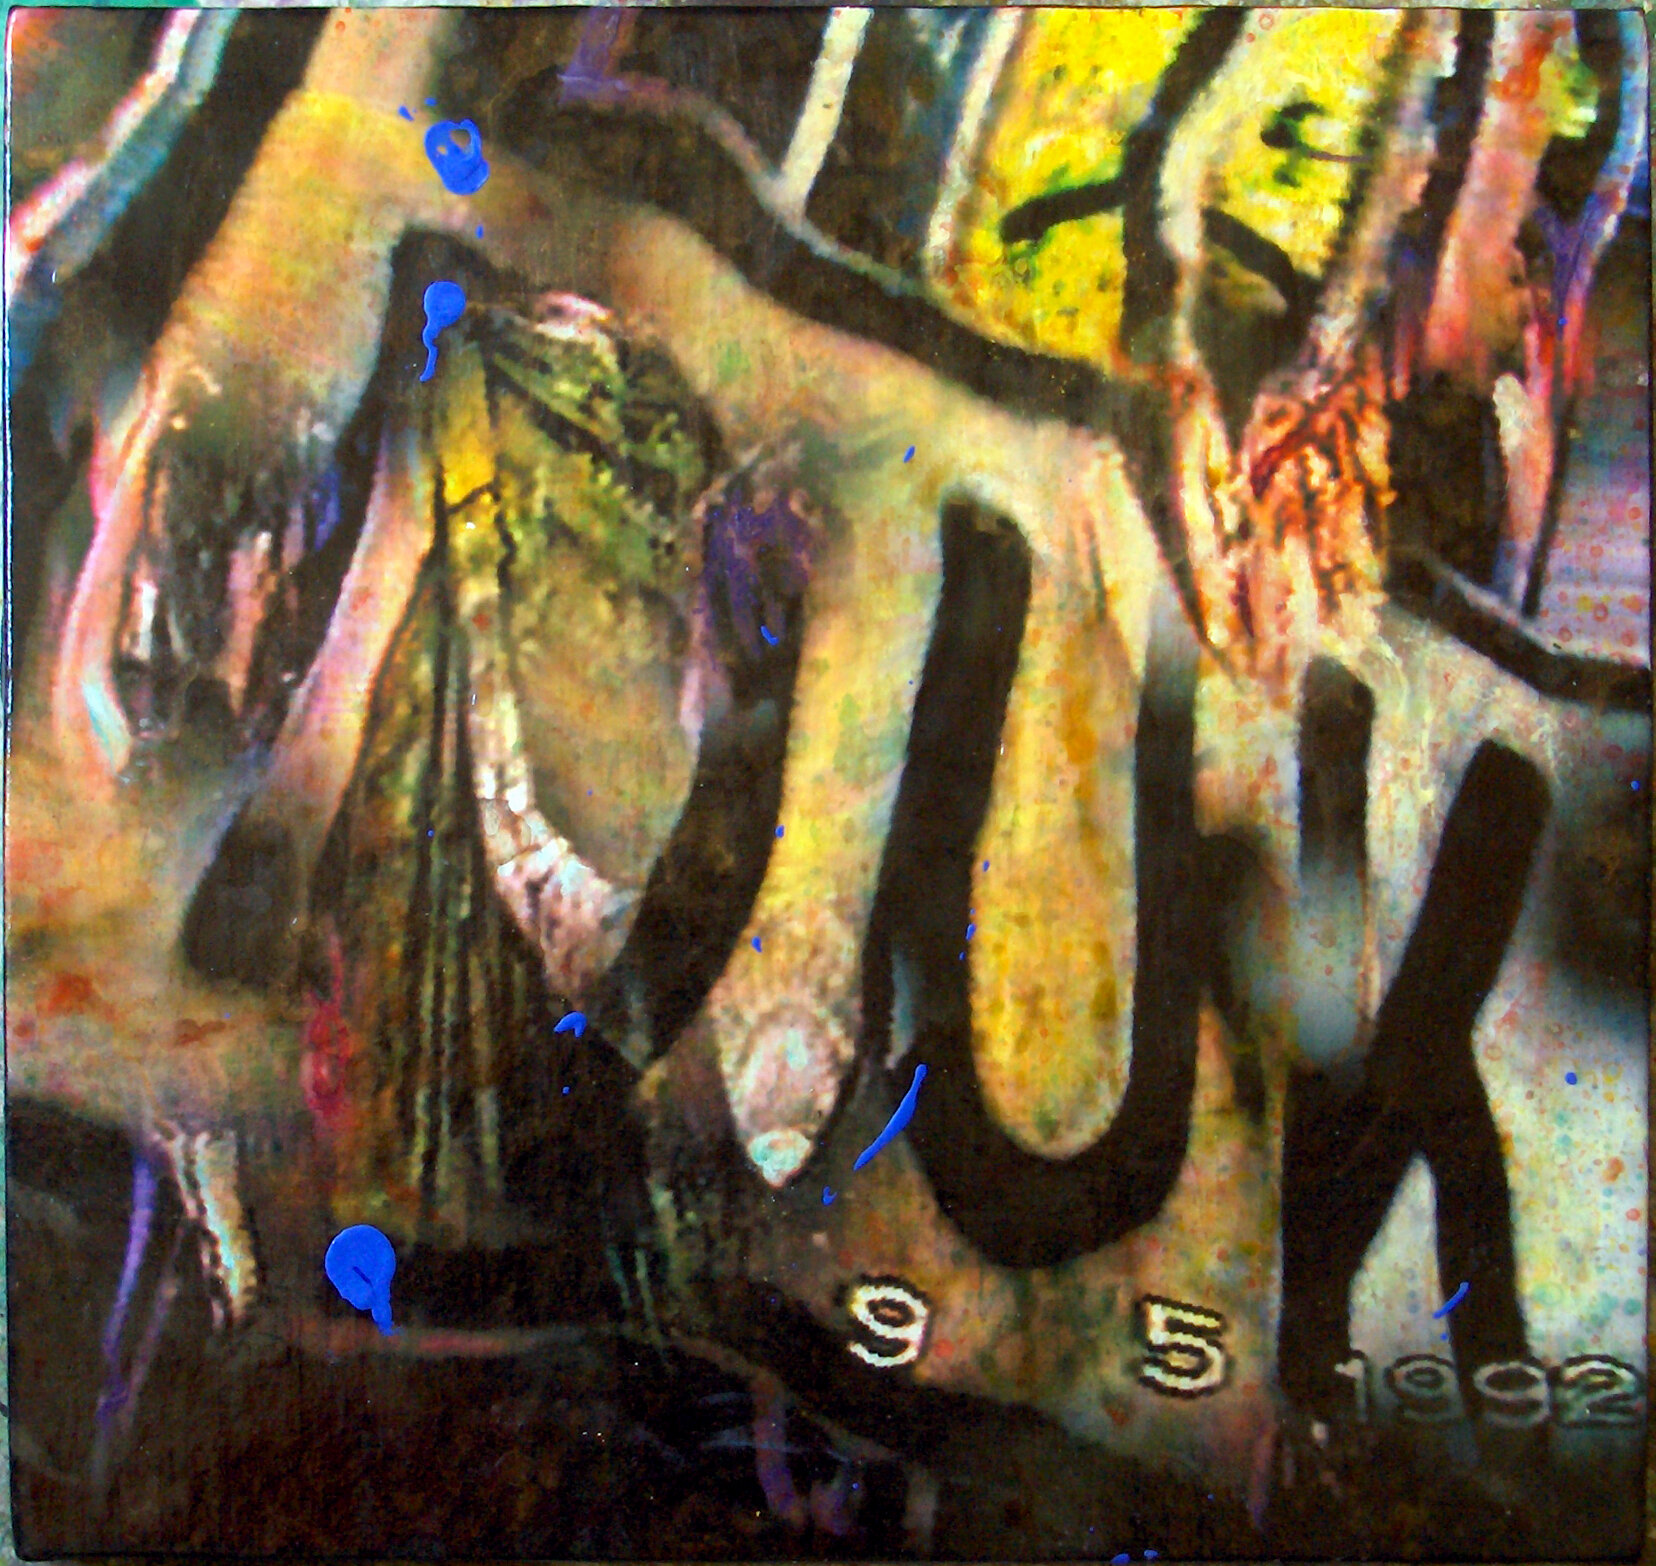   Max Book,   Dukat , 2007, Acrylic based mixed media on canvas, 36 x 38 cm 